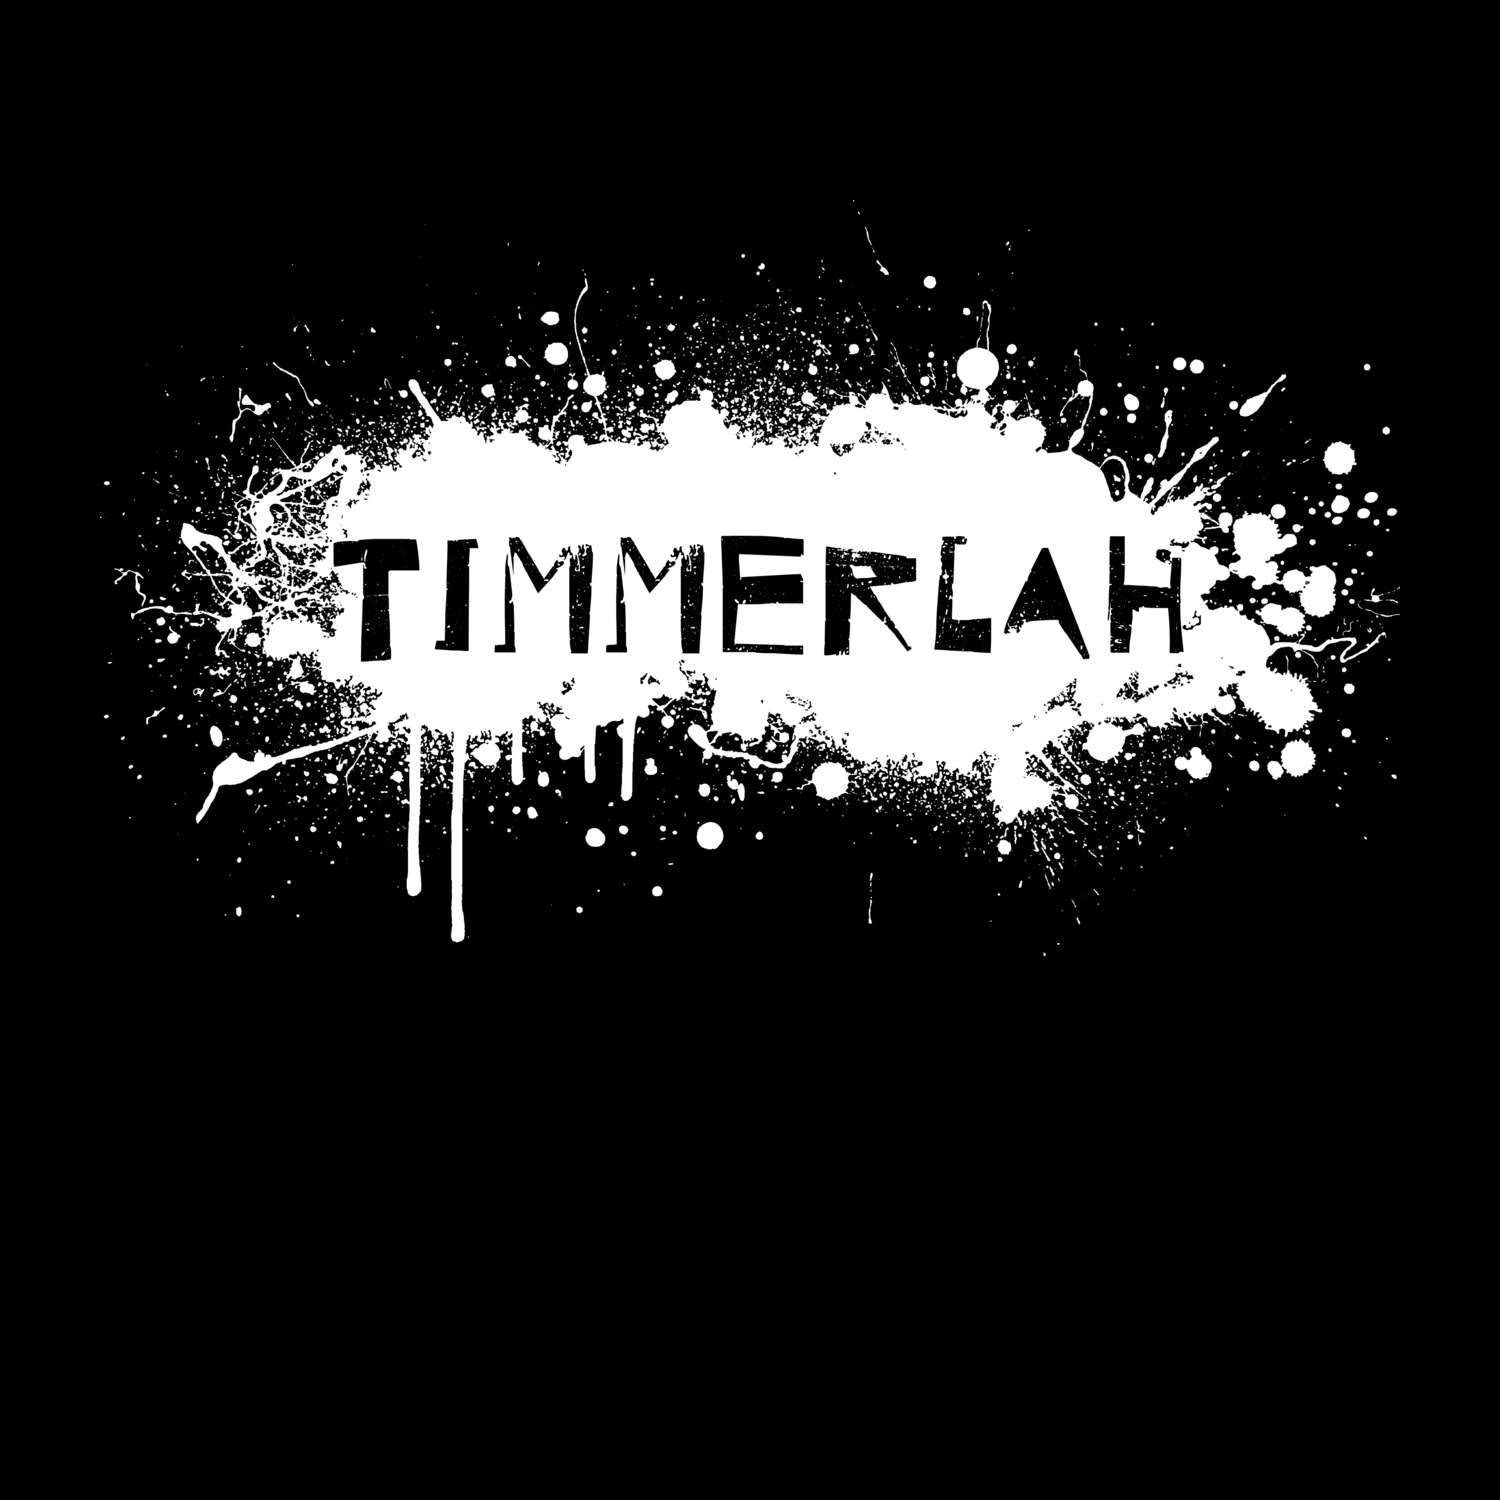 Timmerlah T-Shirt »Paint Splash Punk«